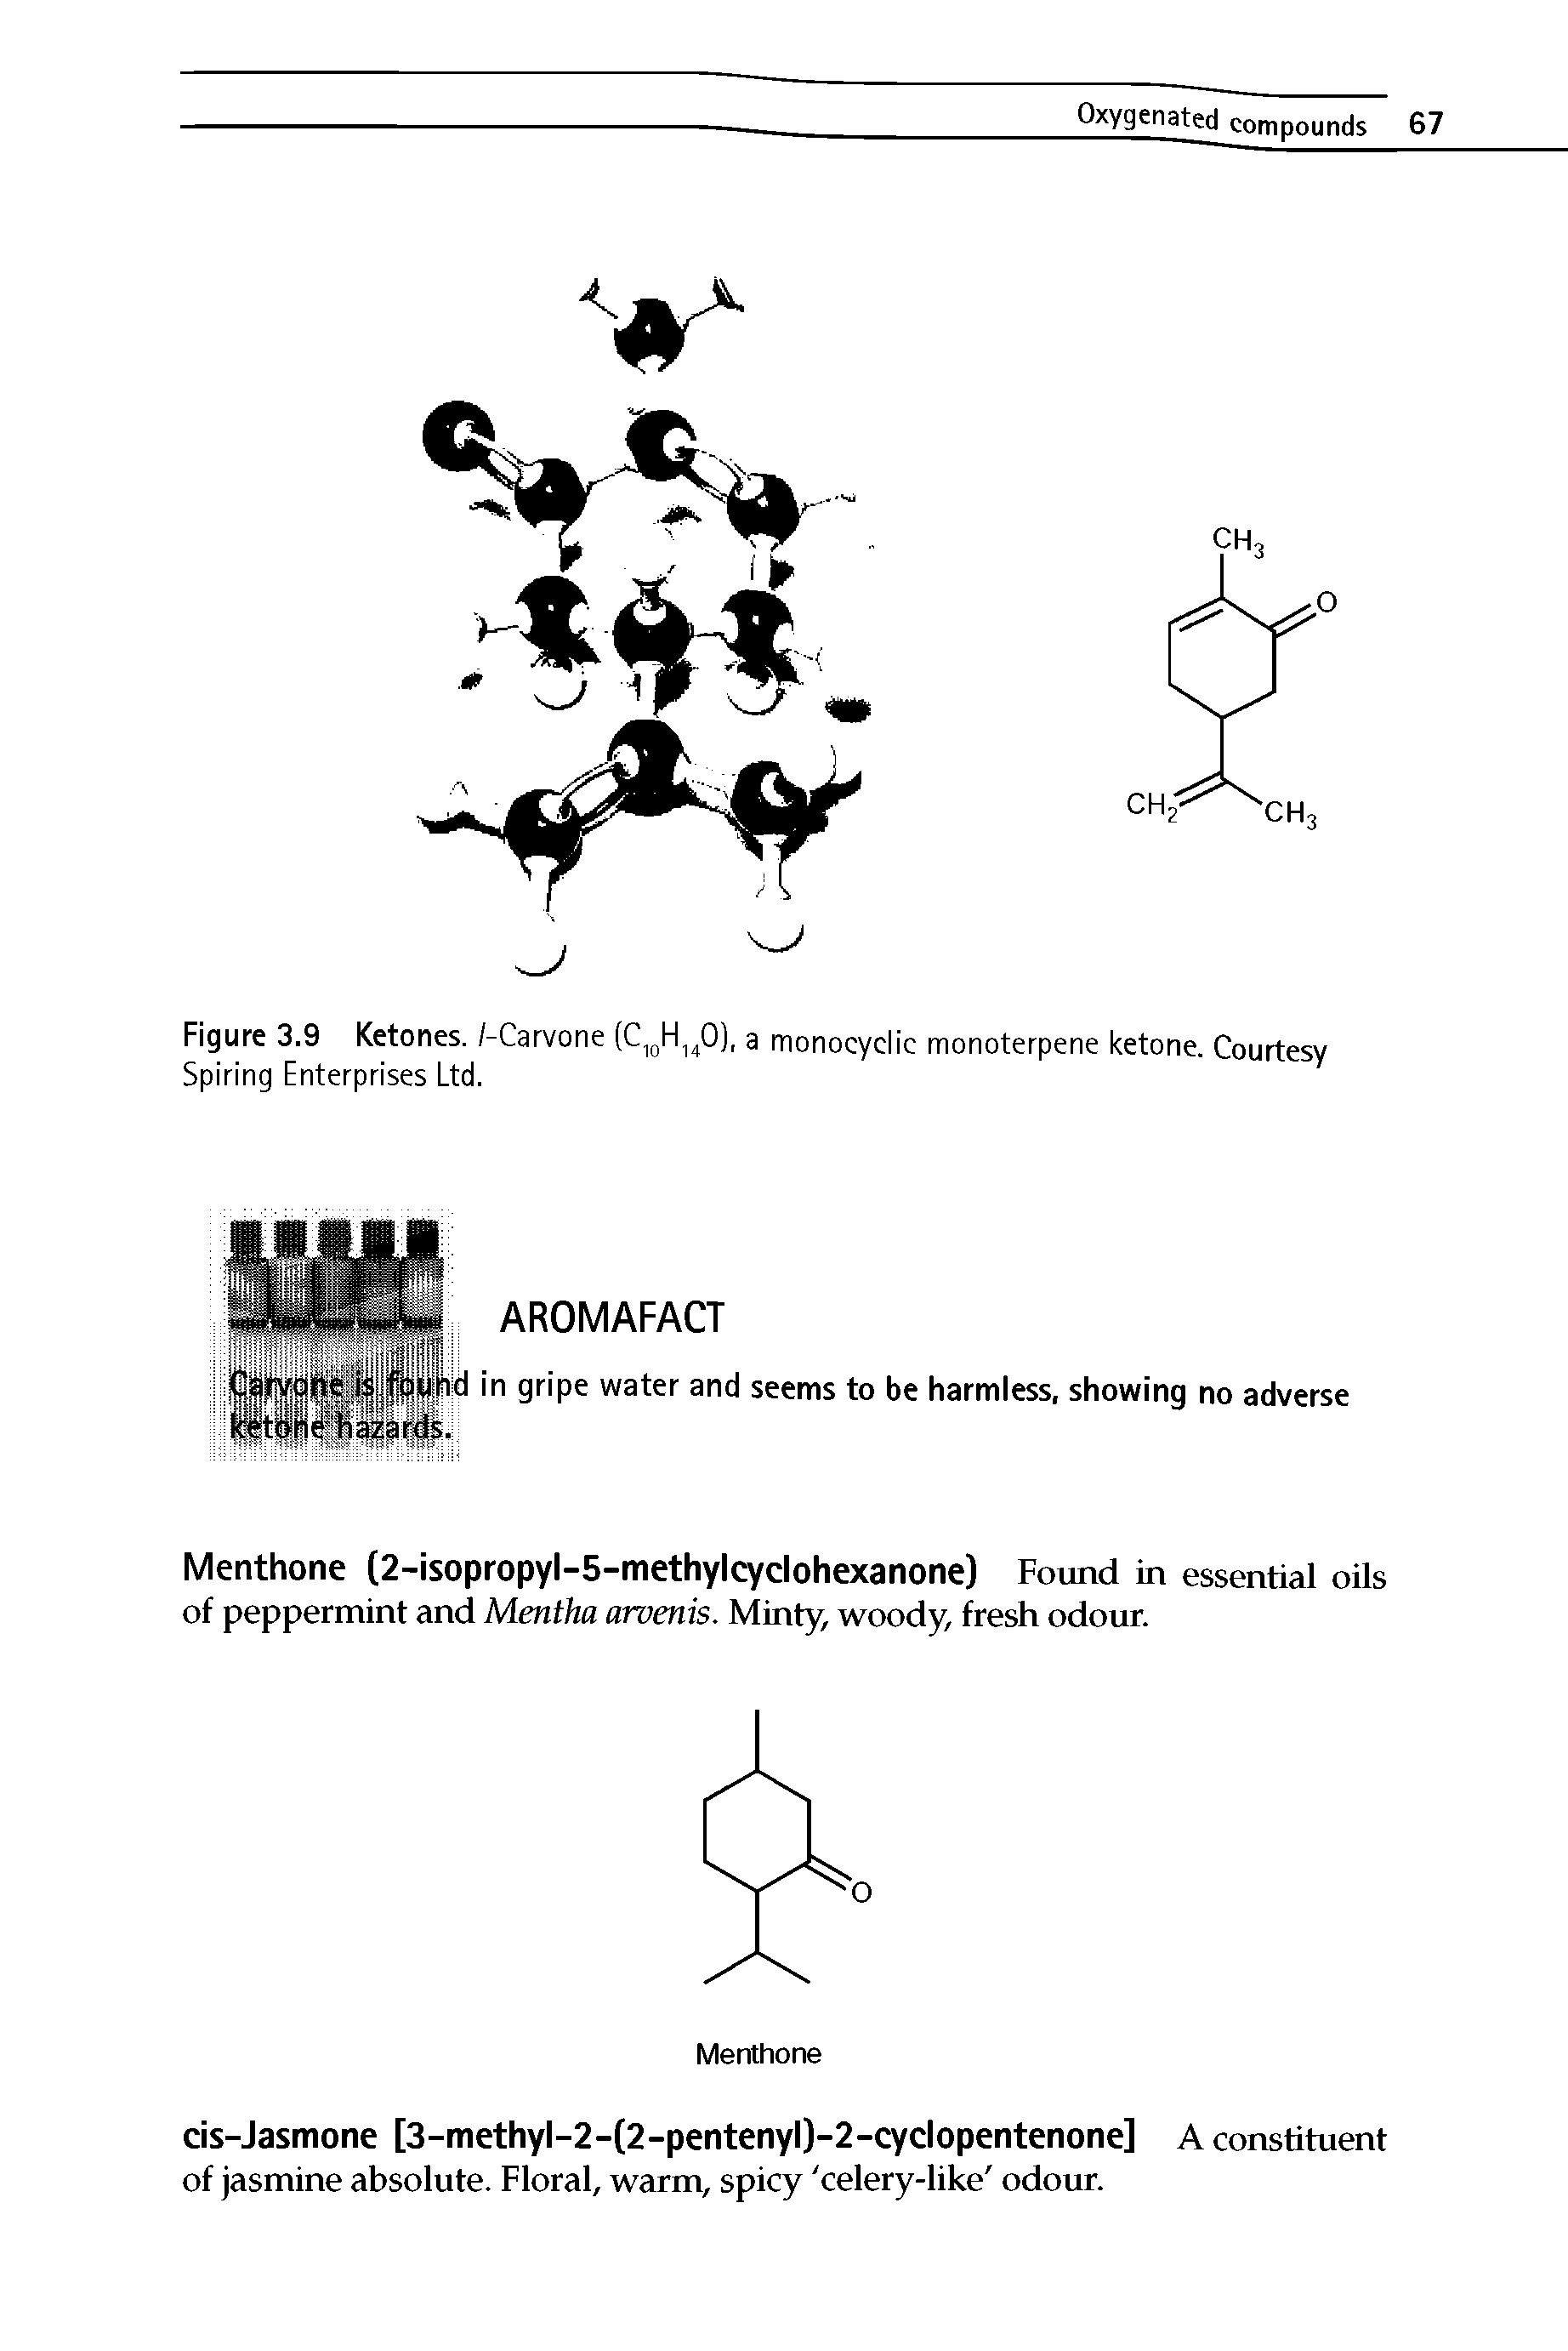 Figure 3.9 Ketones. /-Carvone (C10H140), a monocyclic monoterpene ketone. Courtesy Spiring Enterprises Ltd.